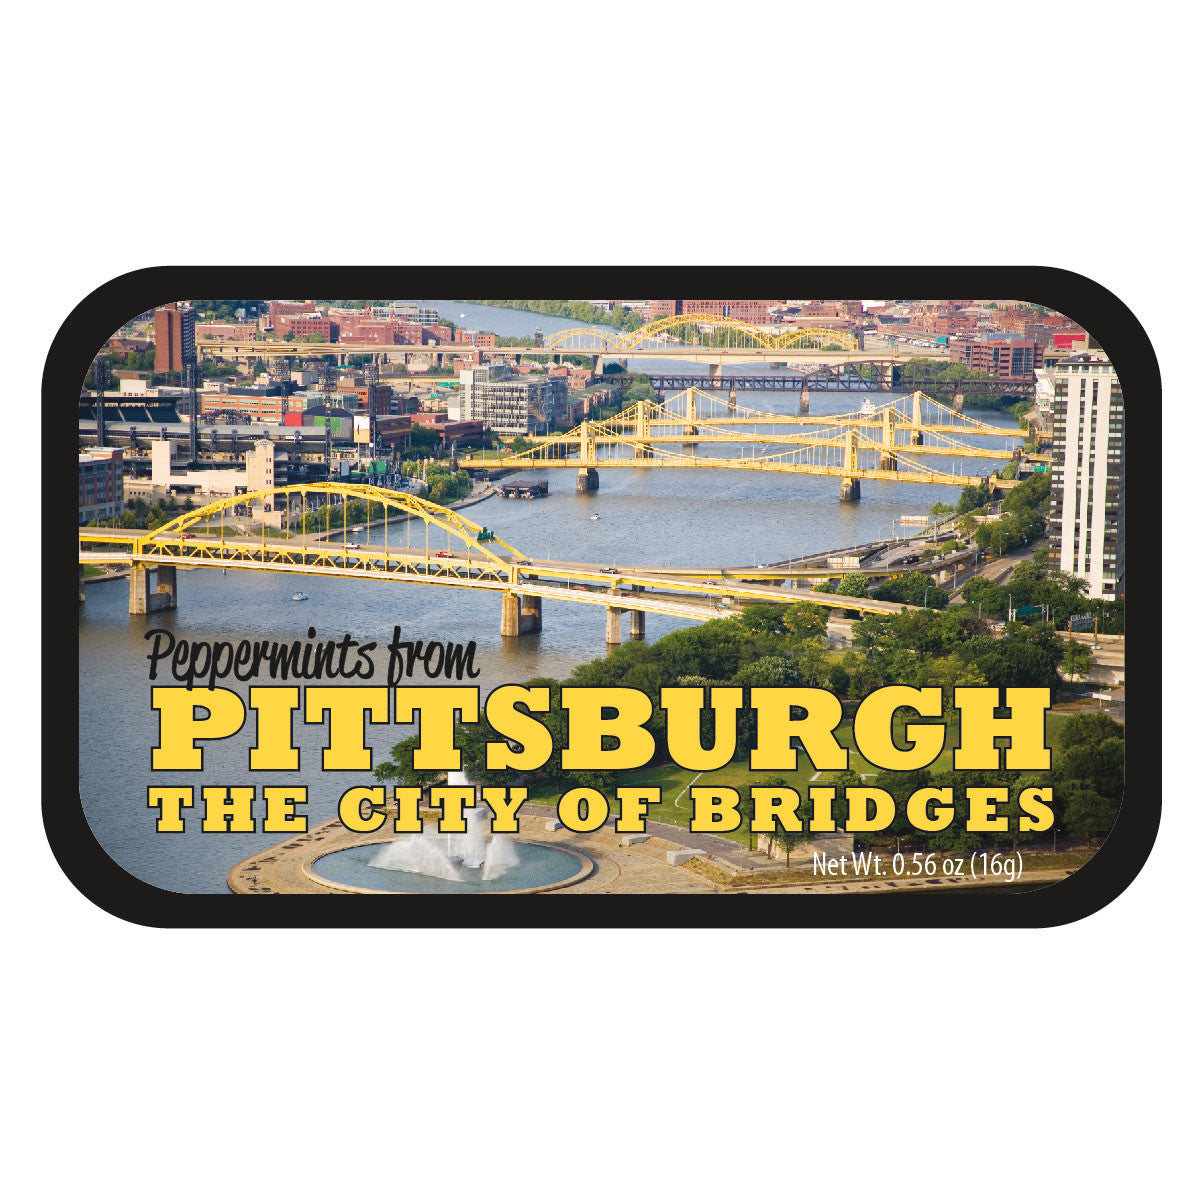 Pittsburg Bridges - 1033S